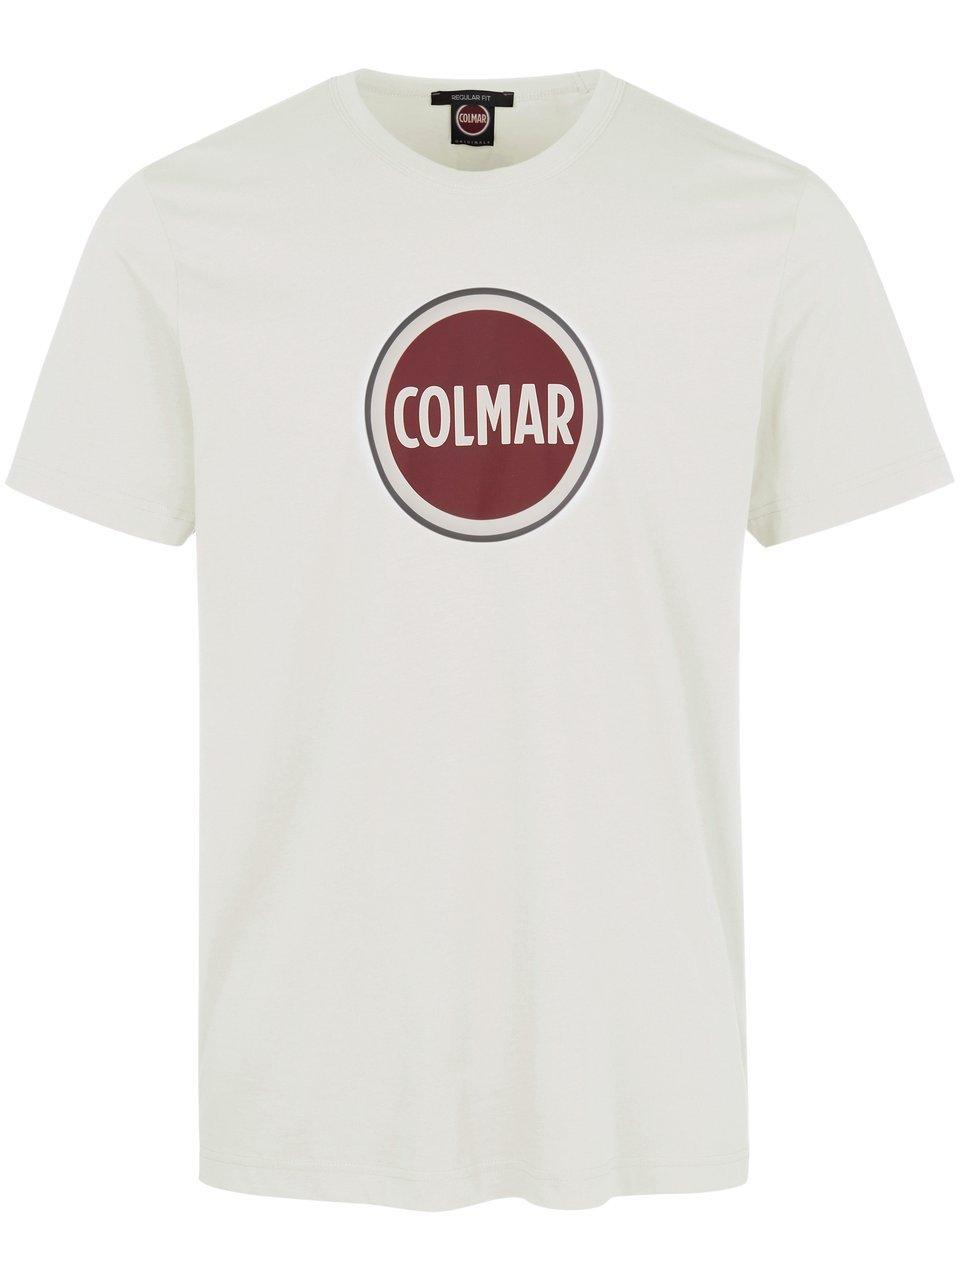 T-shirt Van COLMAR wit